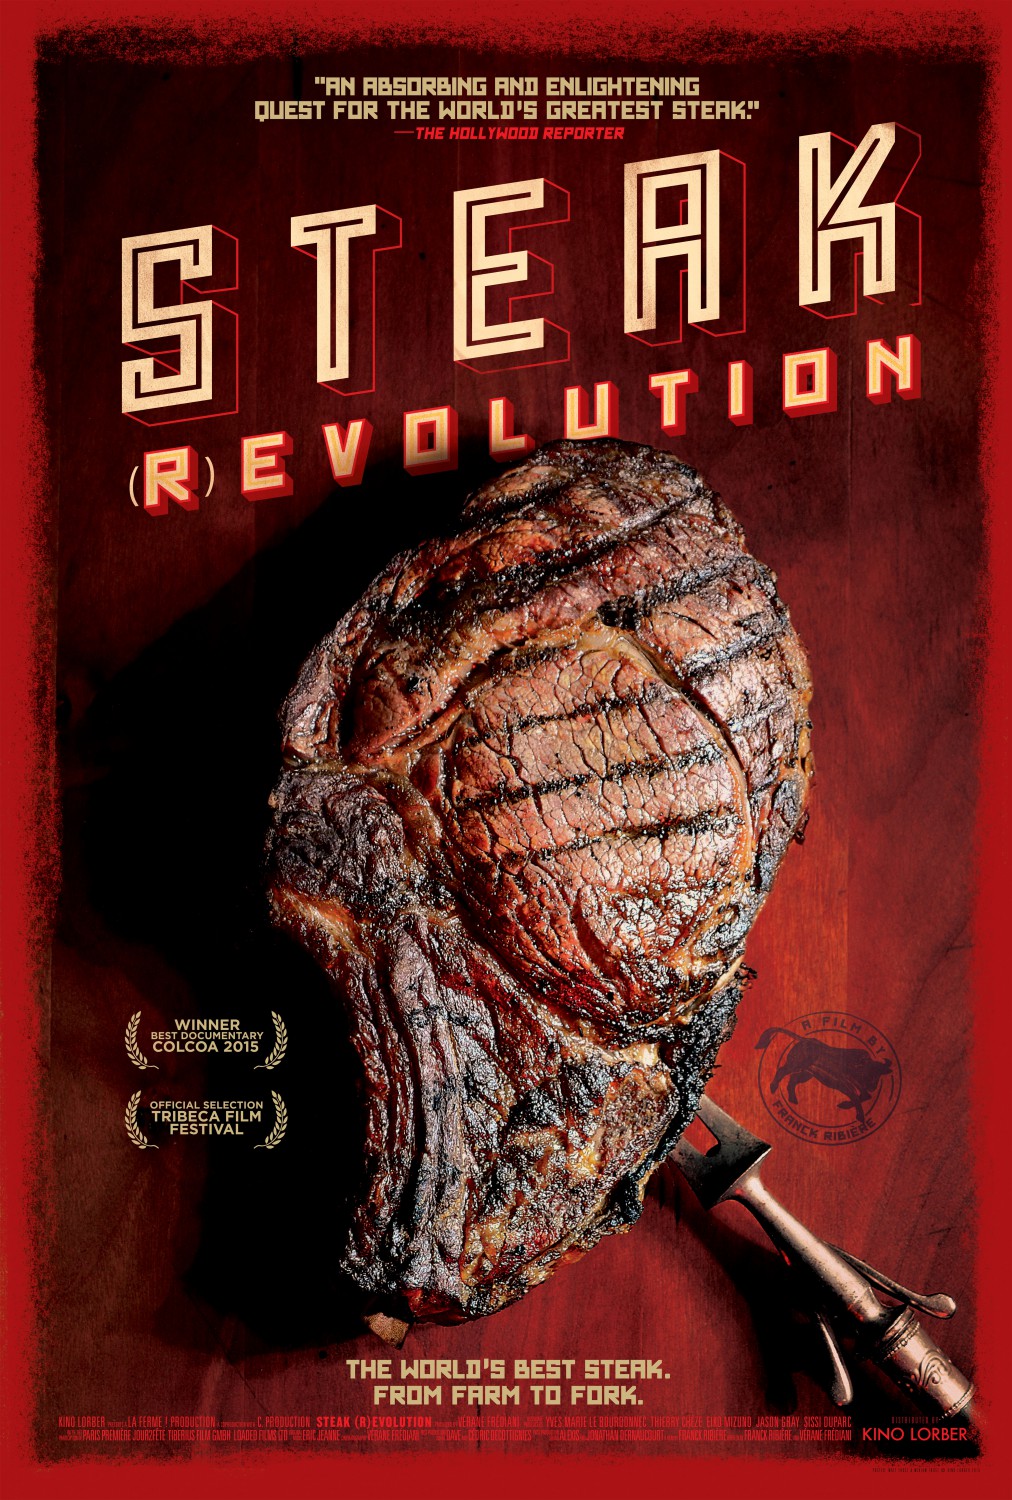 Extra Large Movie Poster Image for Steak (R)evolution 